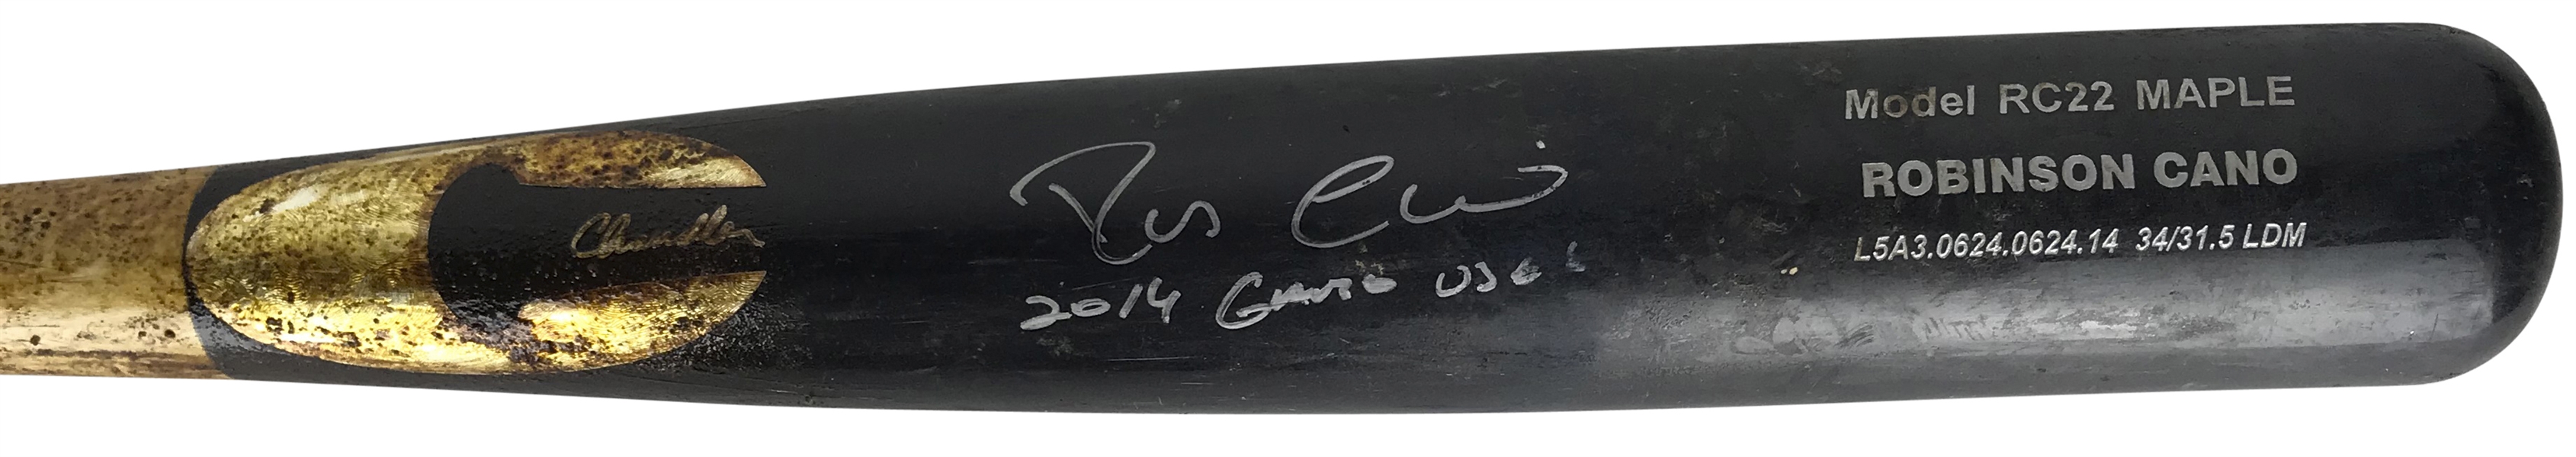 Robinson Cano Signed & Game Used 2014 RC22 Baseball Bat PSA/DNA GU 10!